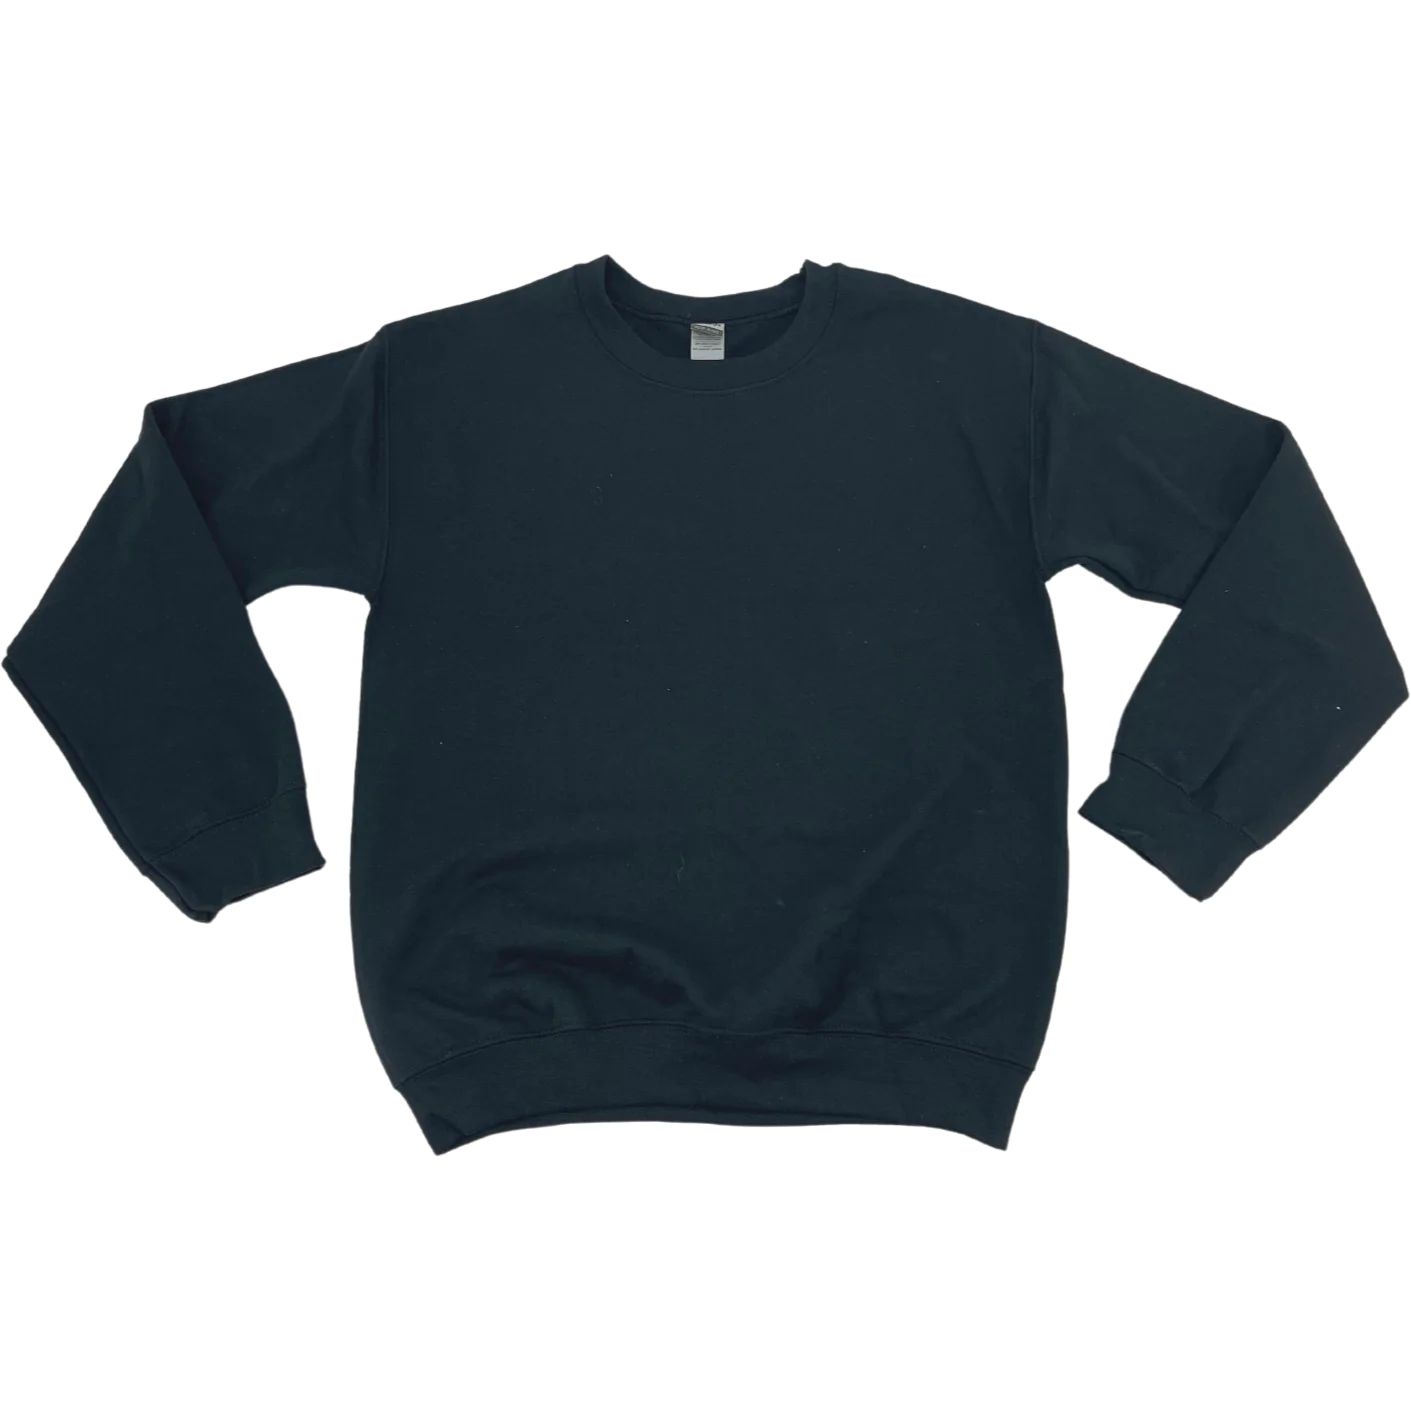 Gildan Unisex Crewneck Sweater / Adult / Black / Size Small **No Tags**